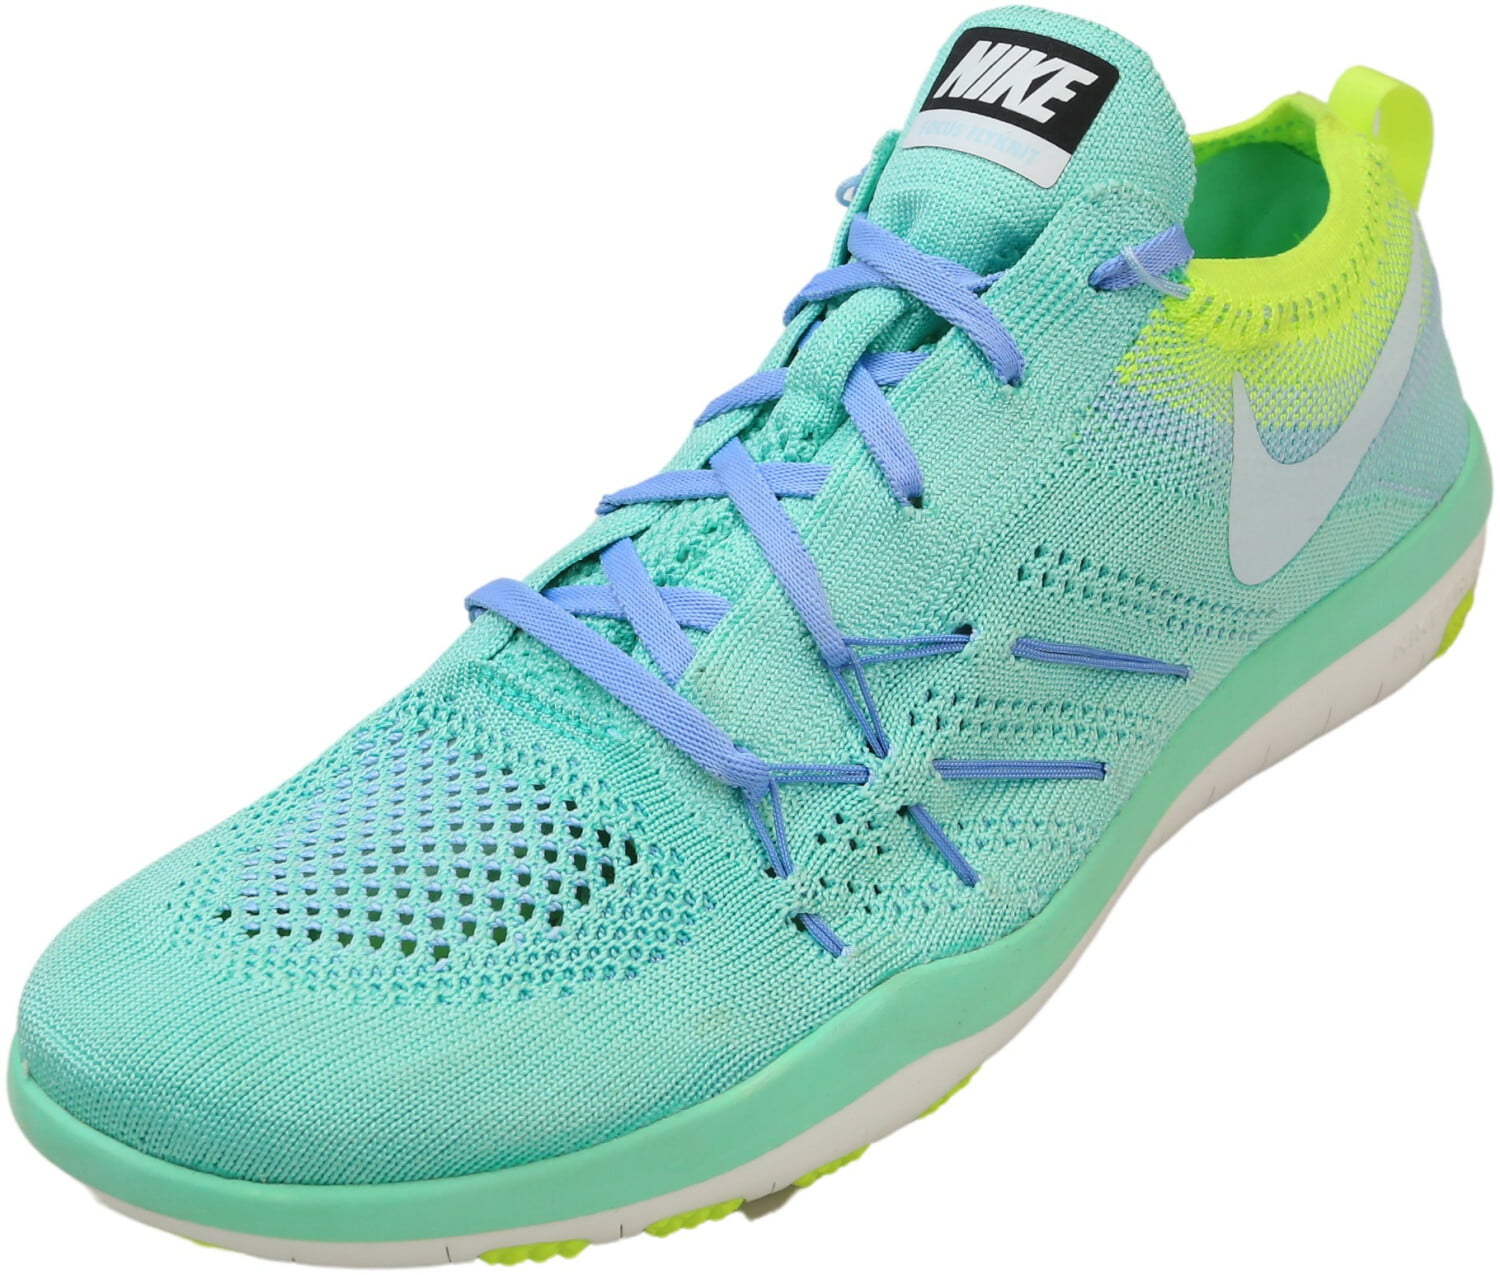 Pase para saber triste Patriótico Nike Women's Free Tr Focus Flyknit Green Glow / Glacier Blue-Volt  Ankle-High Cross Trainers - 8.5M - Walmart.com